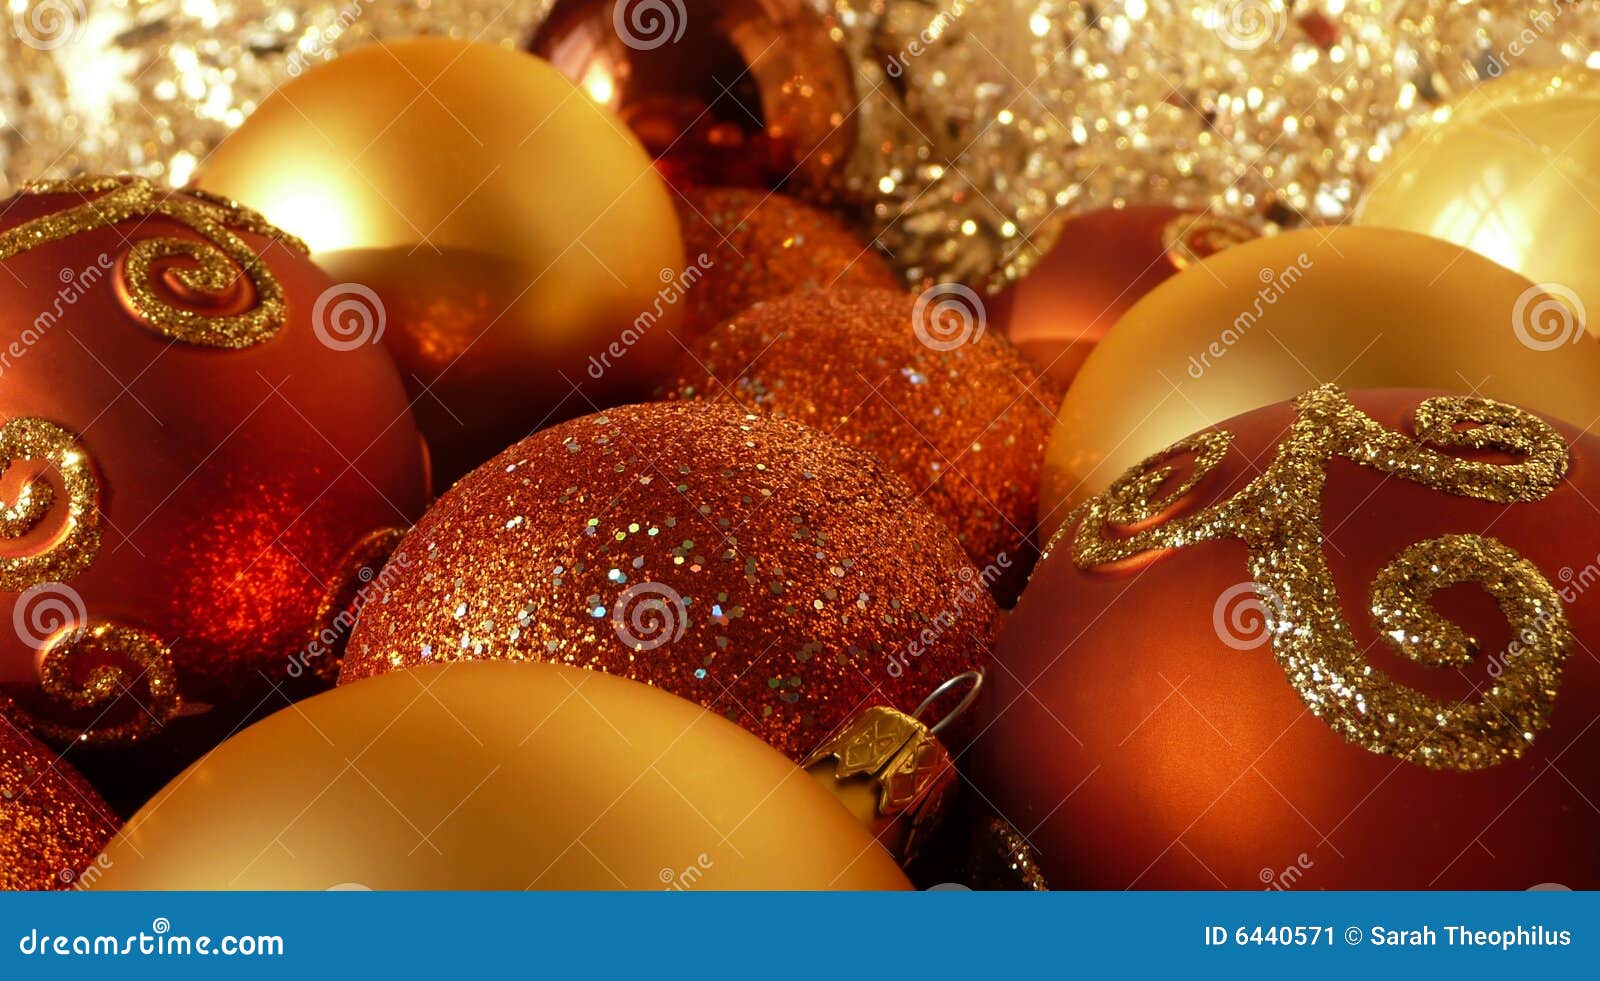 Orange Red & Gold Christmas Balls Stock Image - Image of sparkling ...